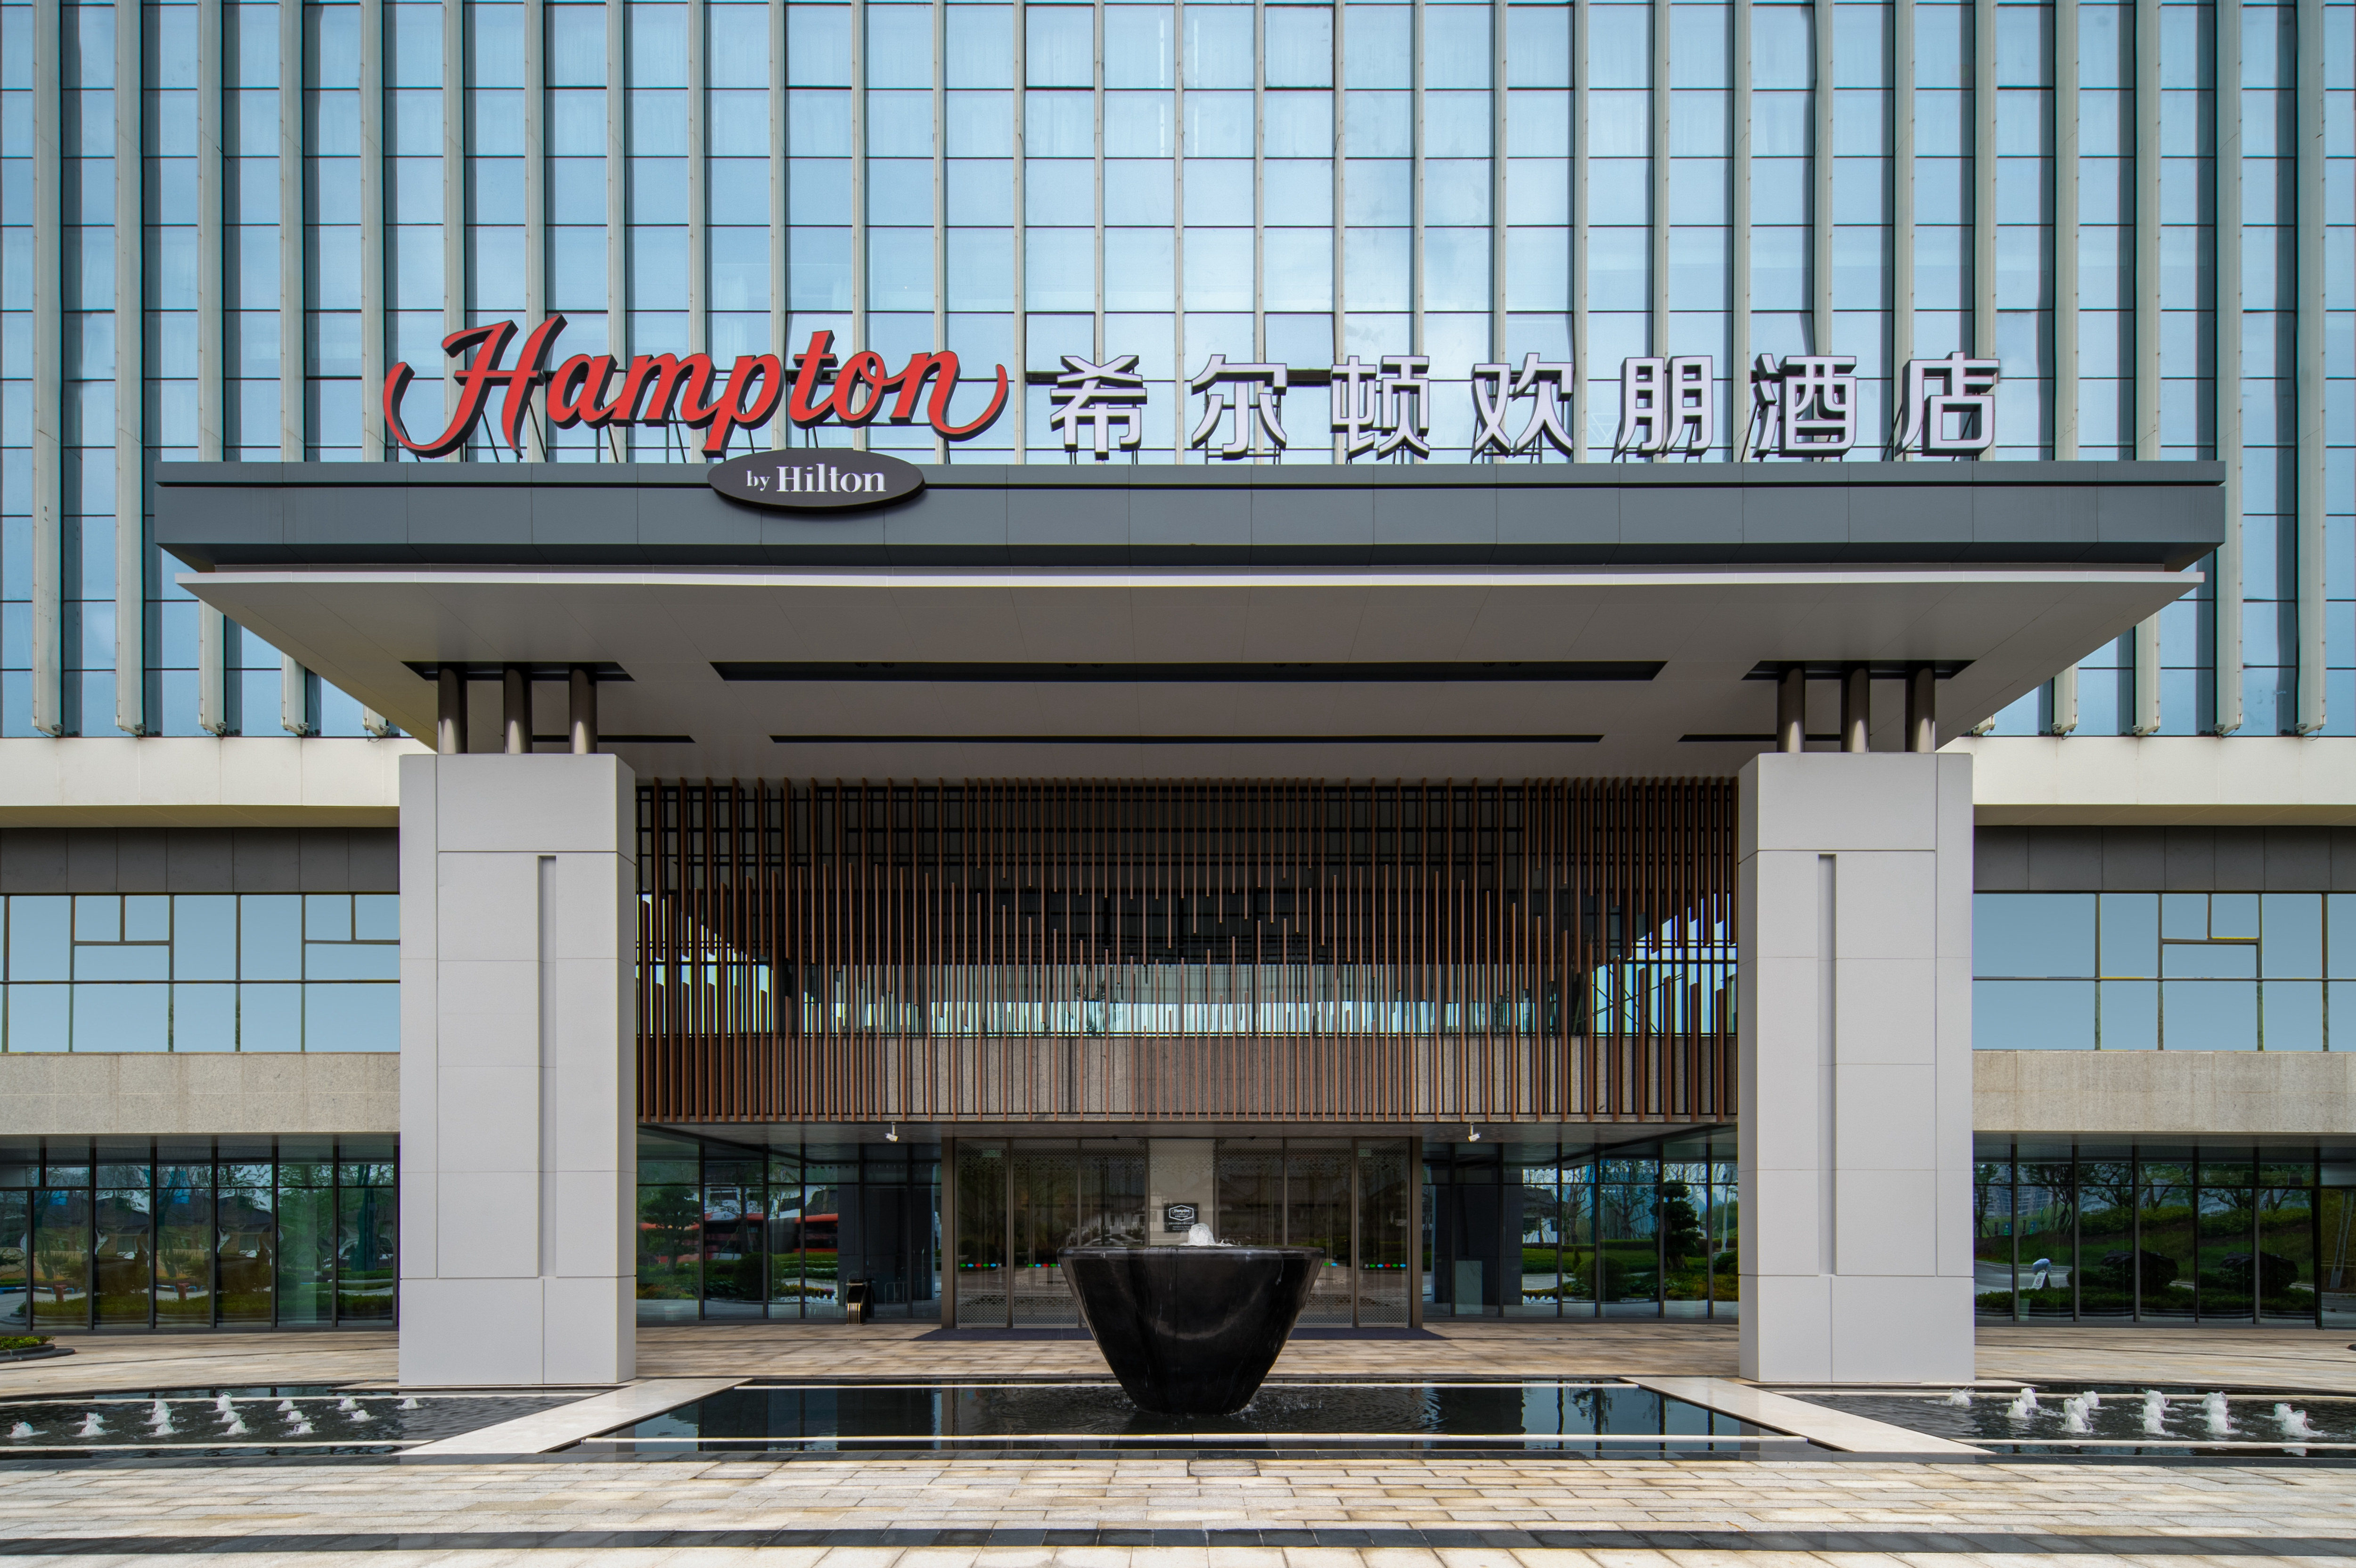 Hampton Inn by Hilton Hotel Exterior